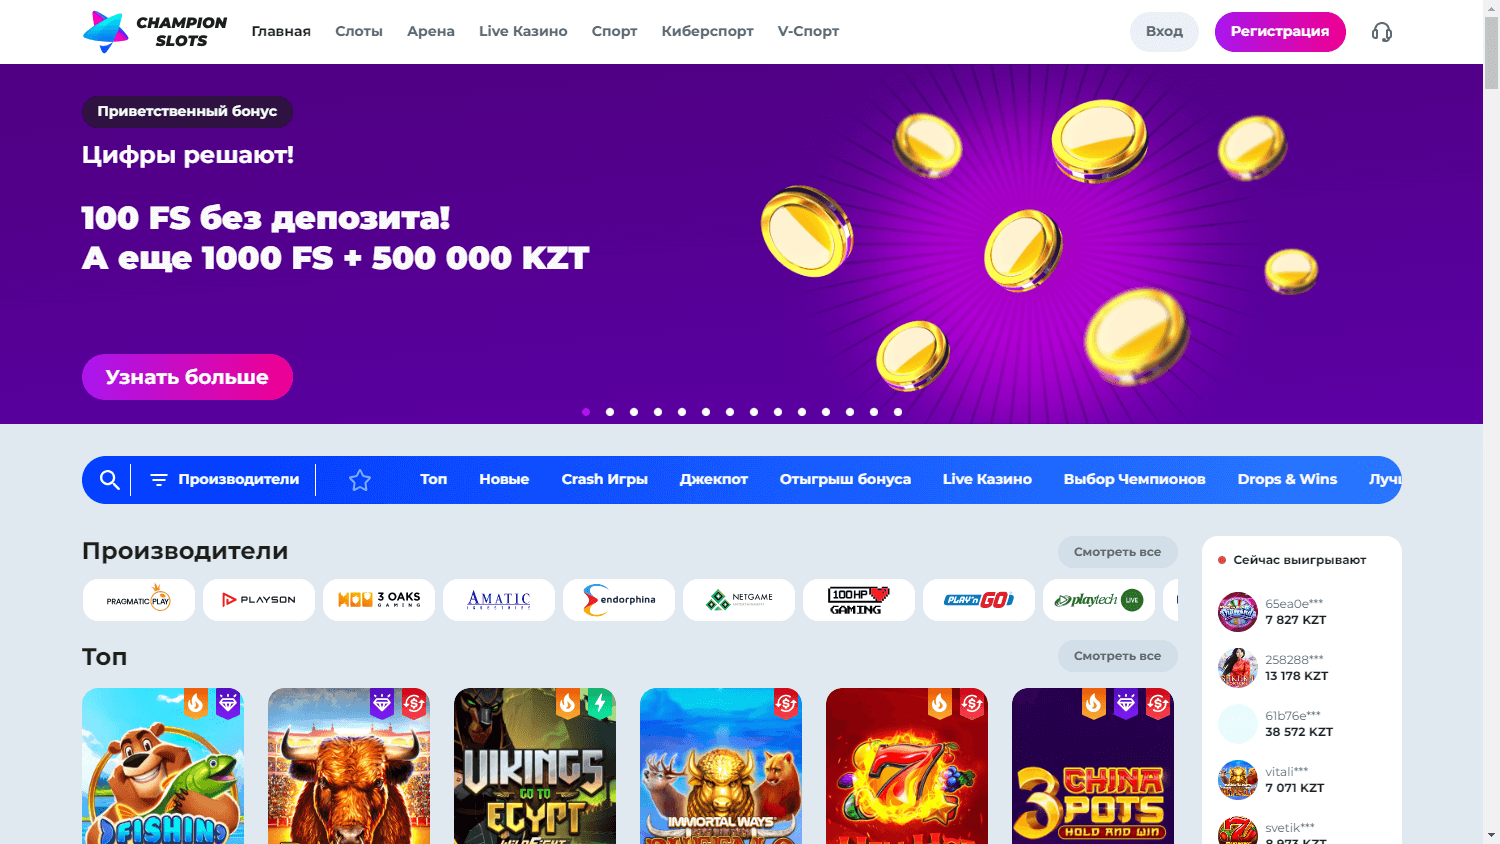 champion_slots_casino_homepage_desktop